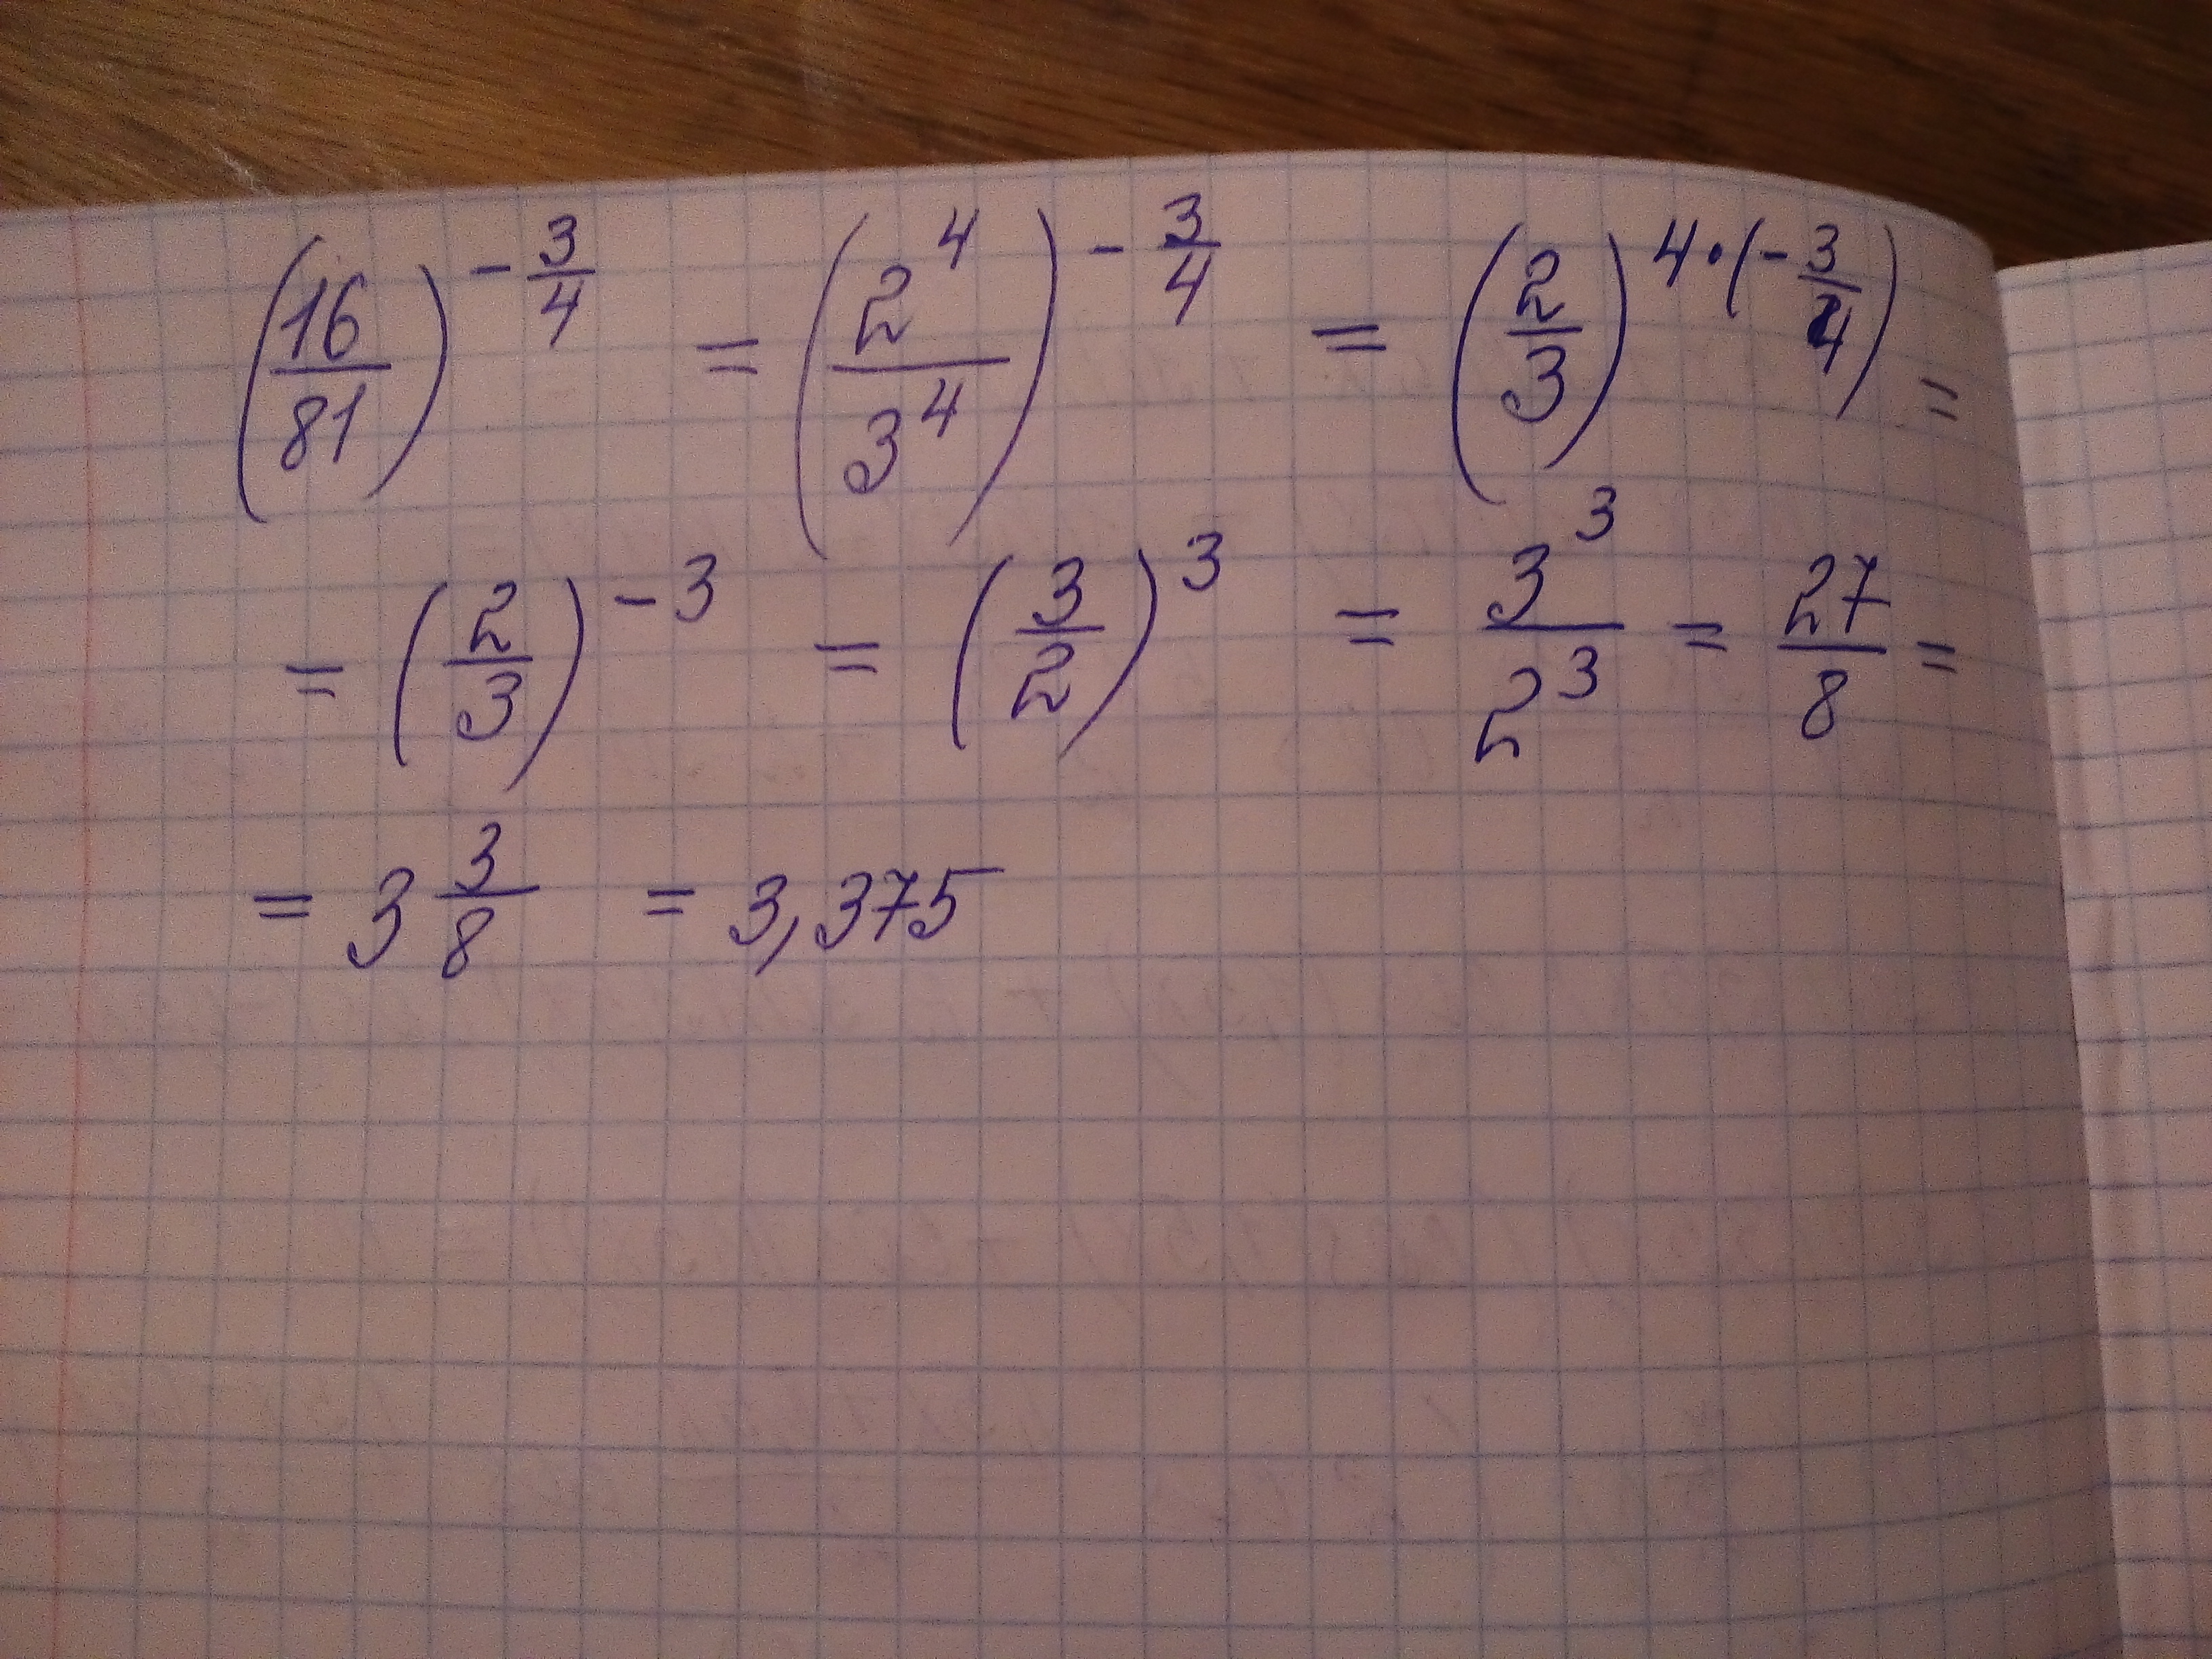 Решение 3 3 81 2. 3 В 4 степени. 16 В степени 3/4. 81 В степени 3/4. 1/16 В степени -3/4.